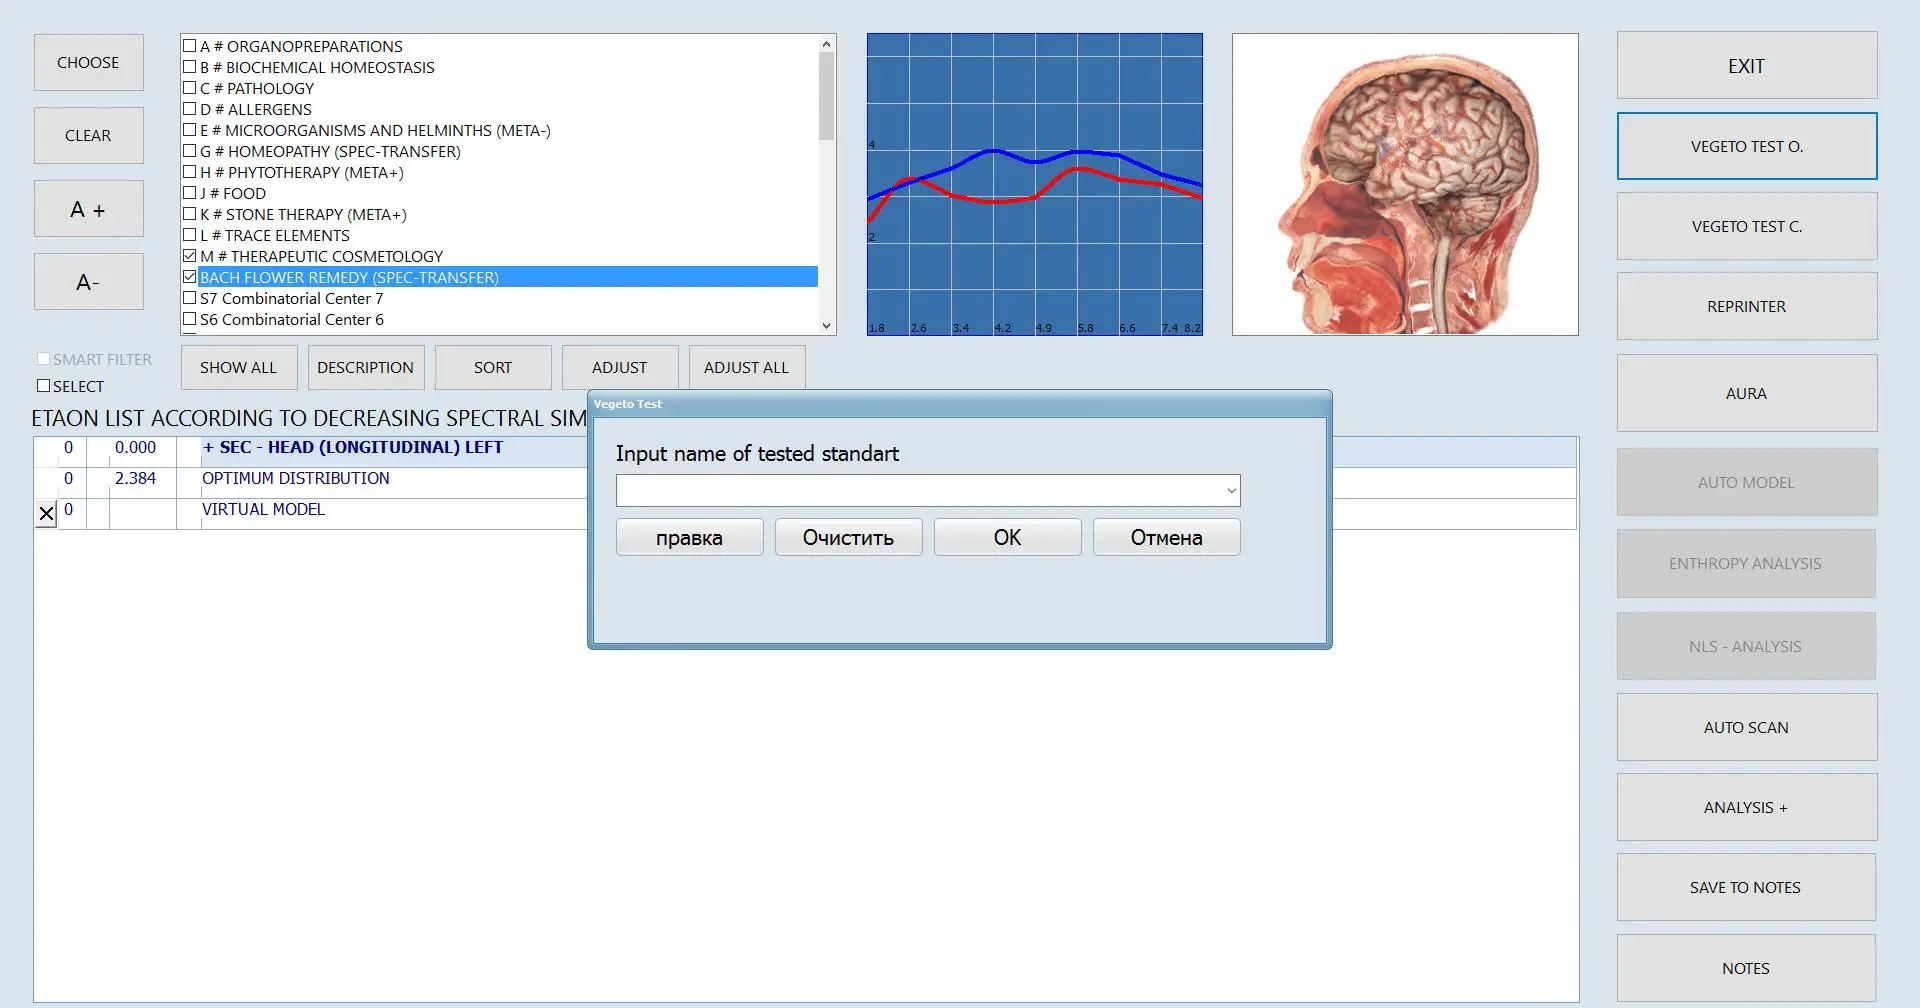 Suyzeko health diagnosis machine analyzer body analysis system Vector V16 NLS